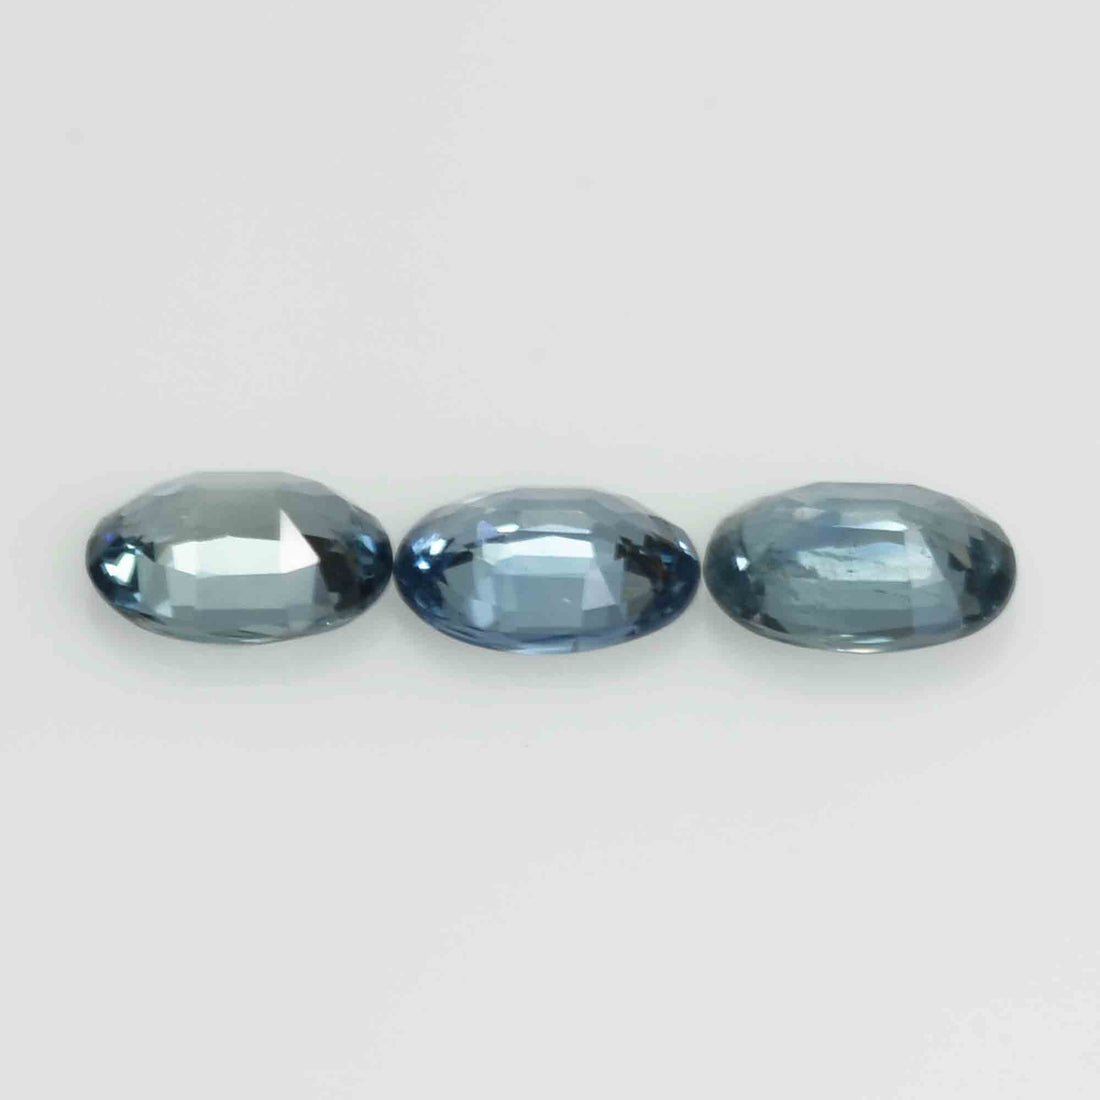 7x5 MM Natural Teal Bluish Green Sapphire Loose Gemstone Oval Cut